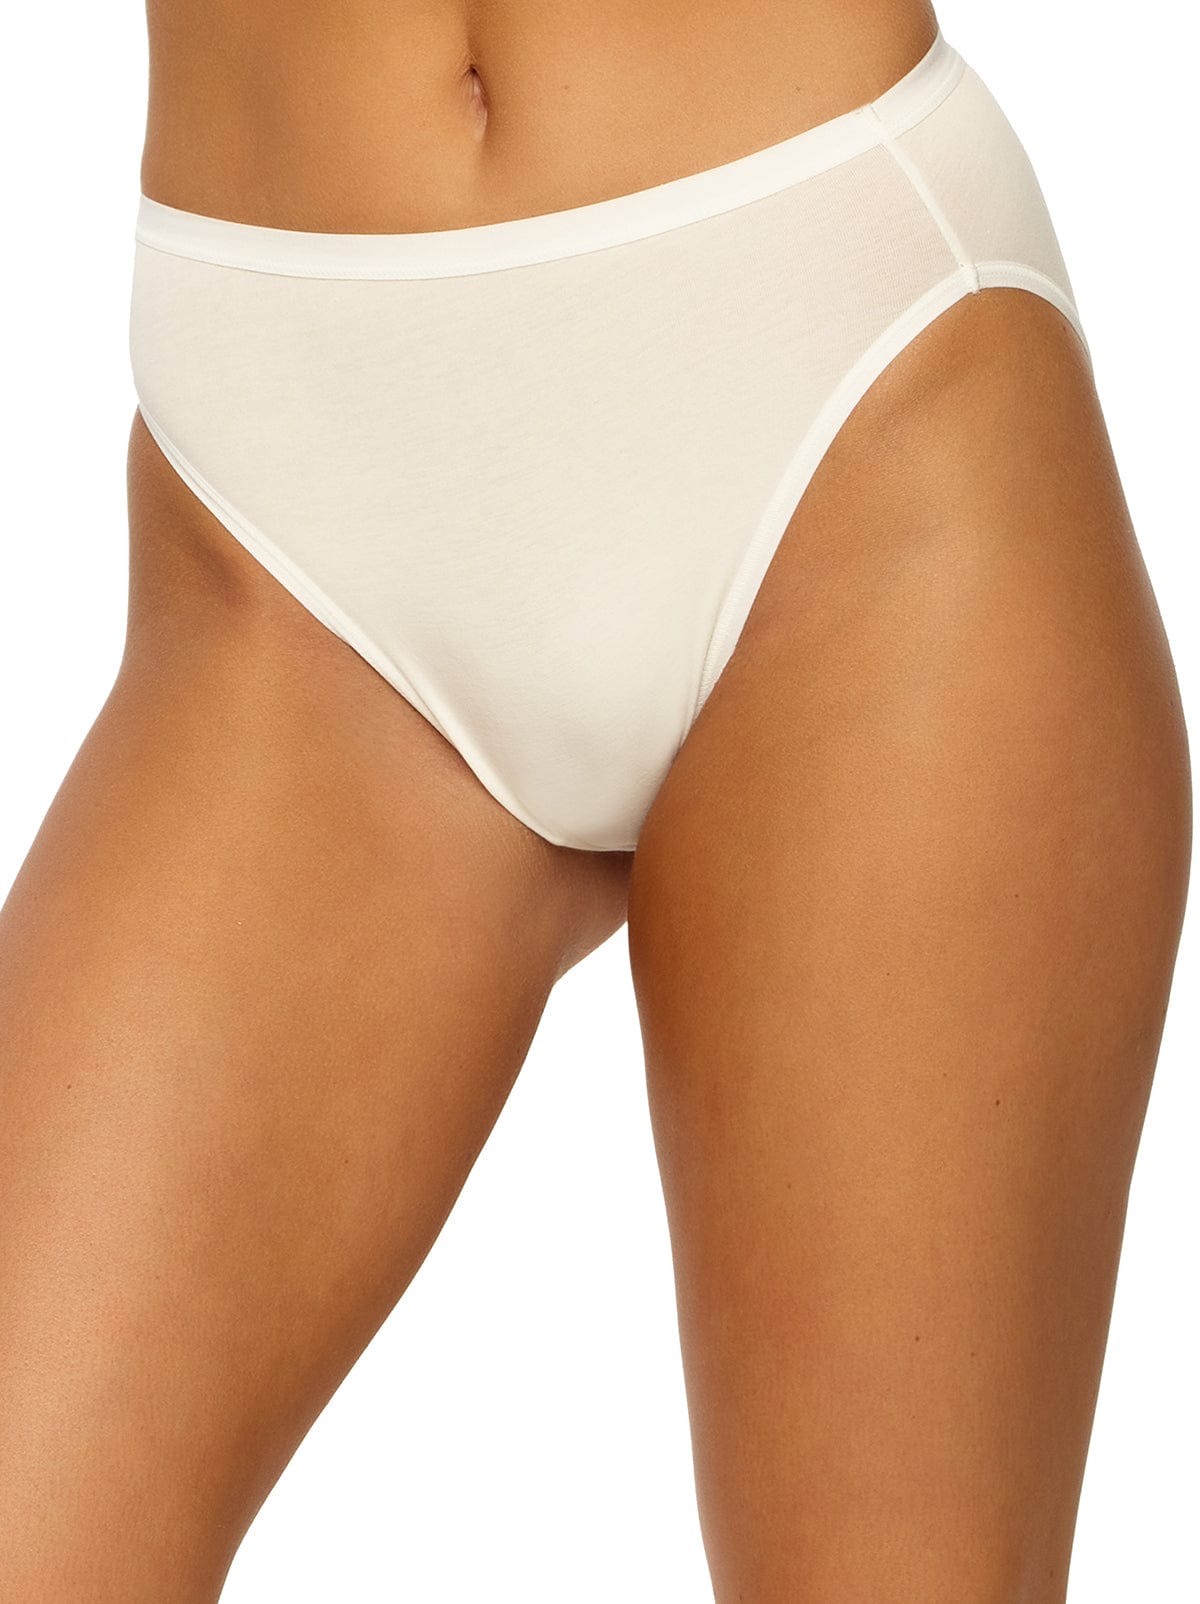 Women's Organic Cotton Panties Underwear(Pack of 8)